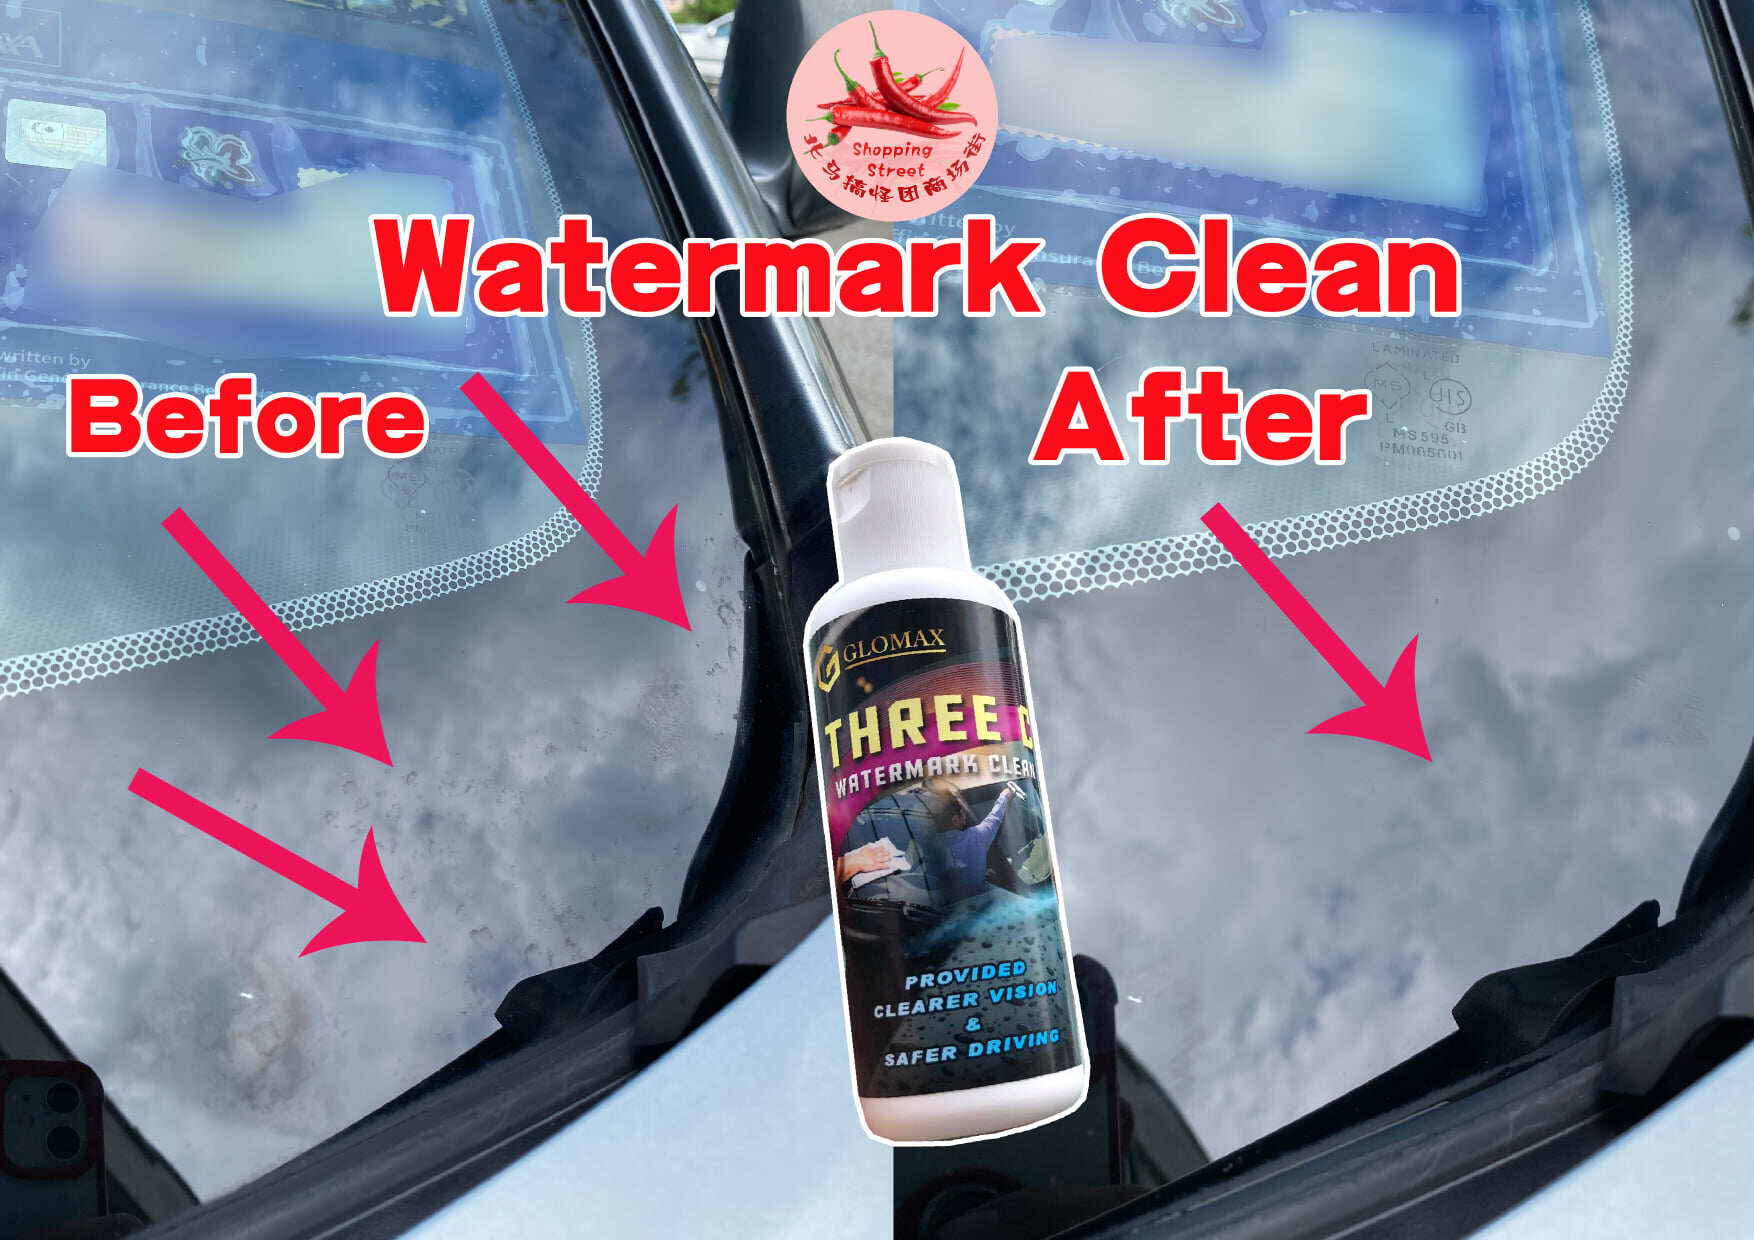 Cara Buang Watermark Pada Cermin Kereta - Penggunaan watermark pada